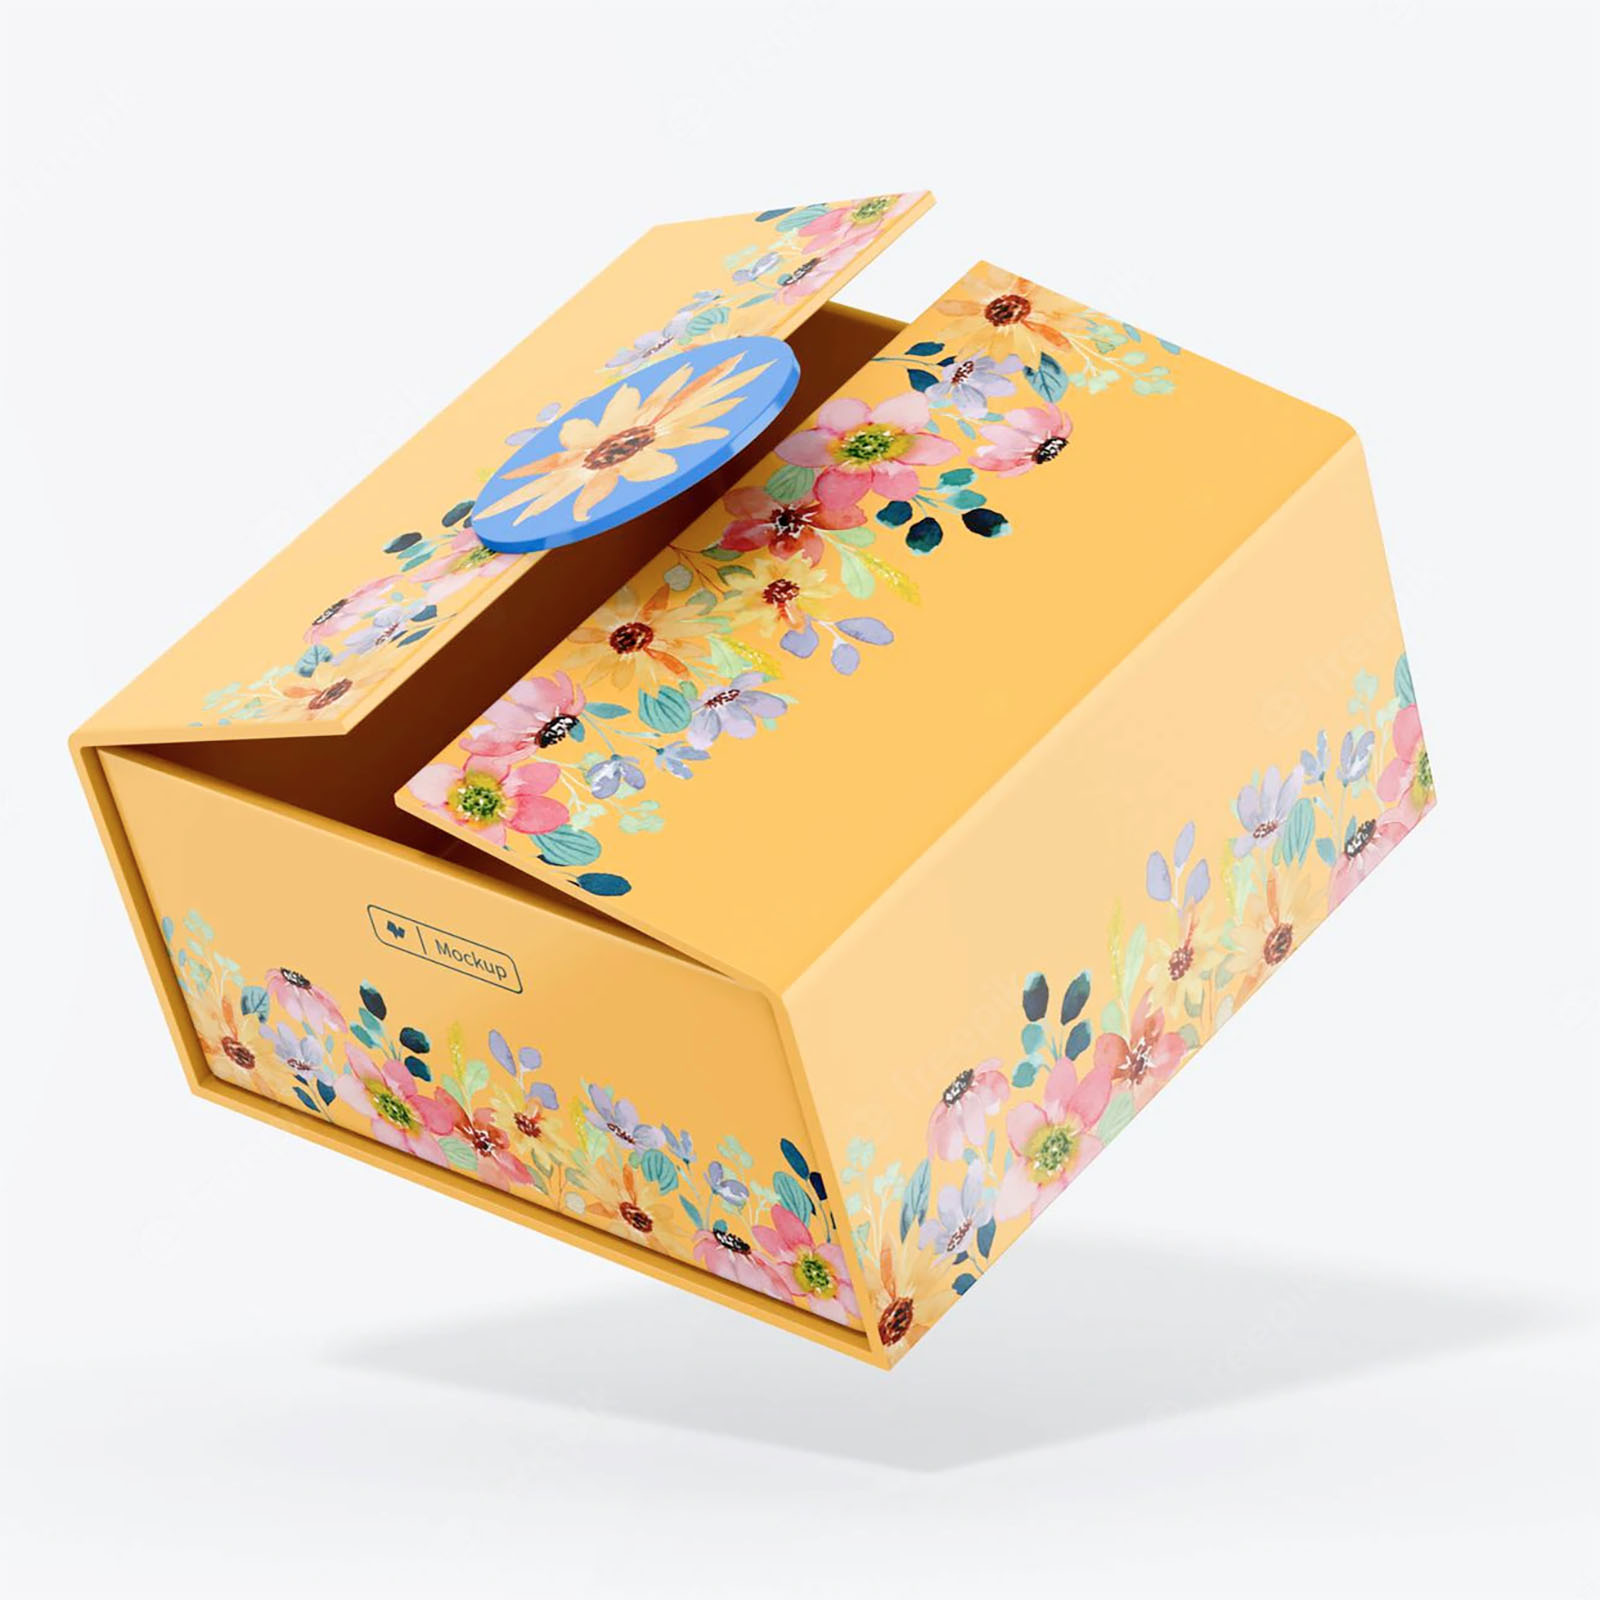 https://handbag-asia.com/wp-content/uploads/2022/11/magnet-closure-gift-box.jpg